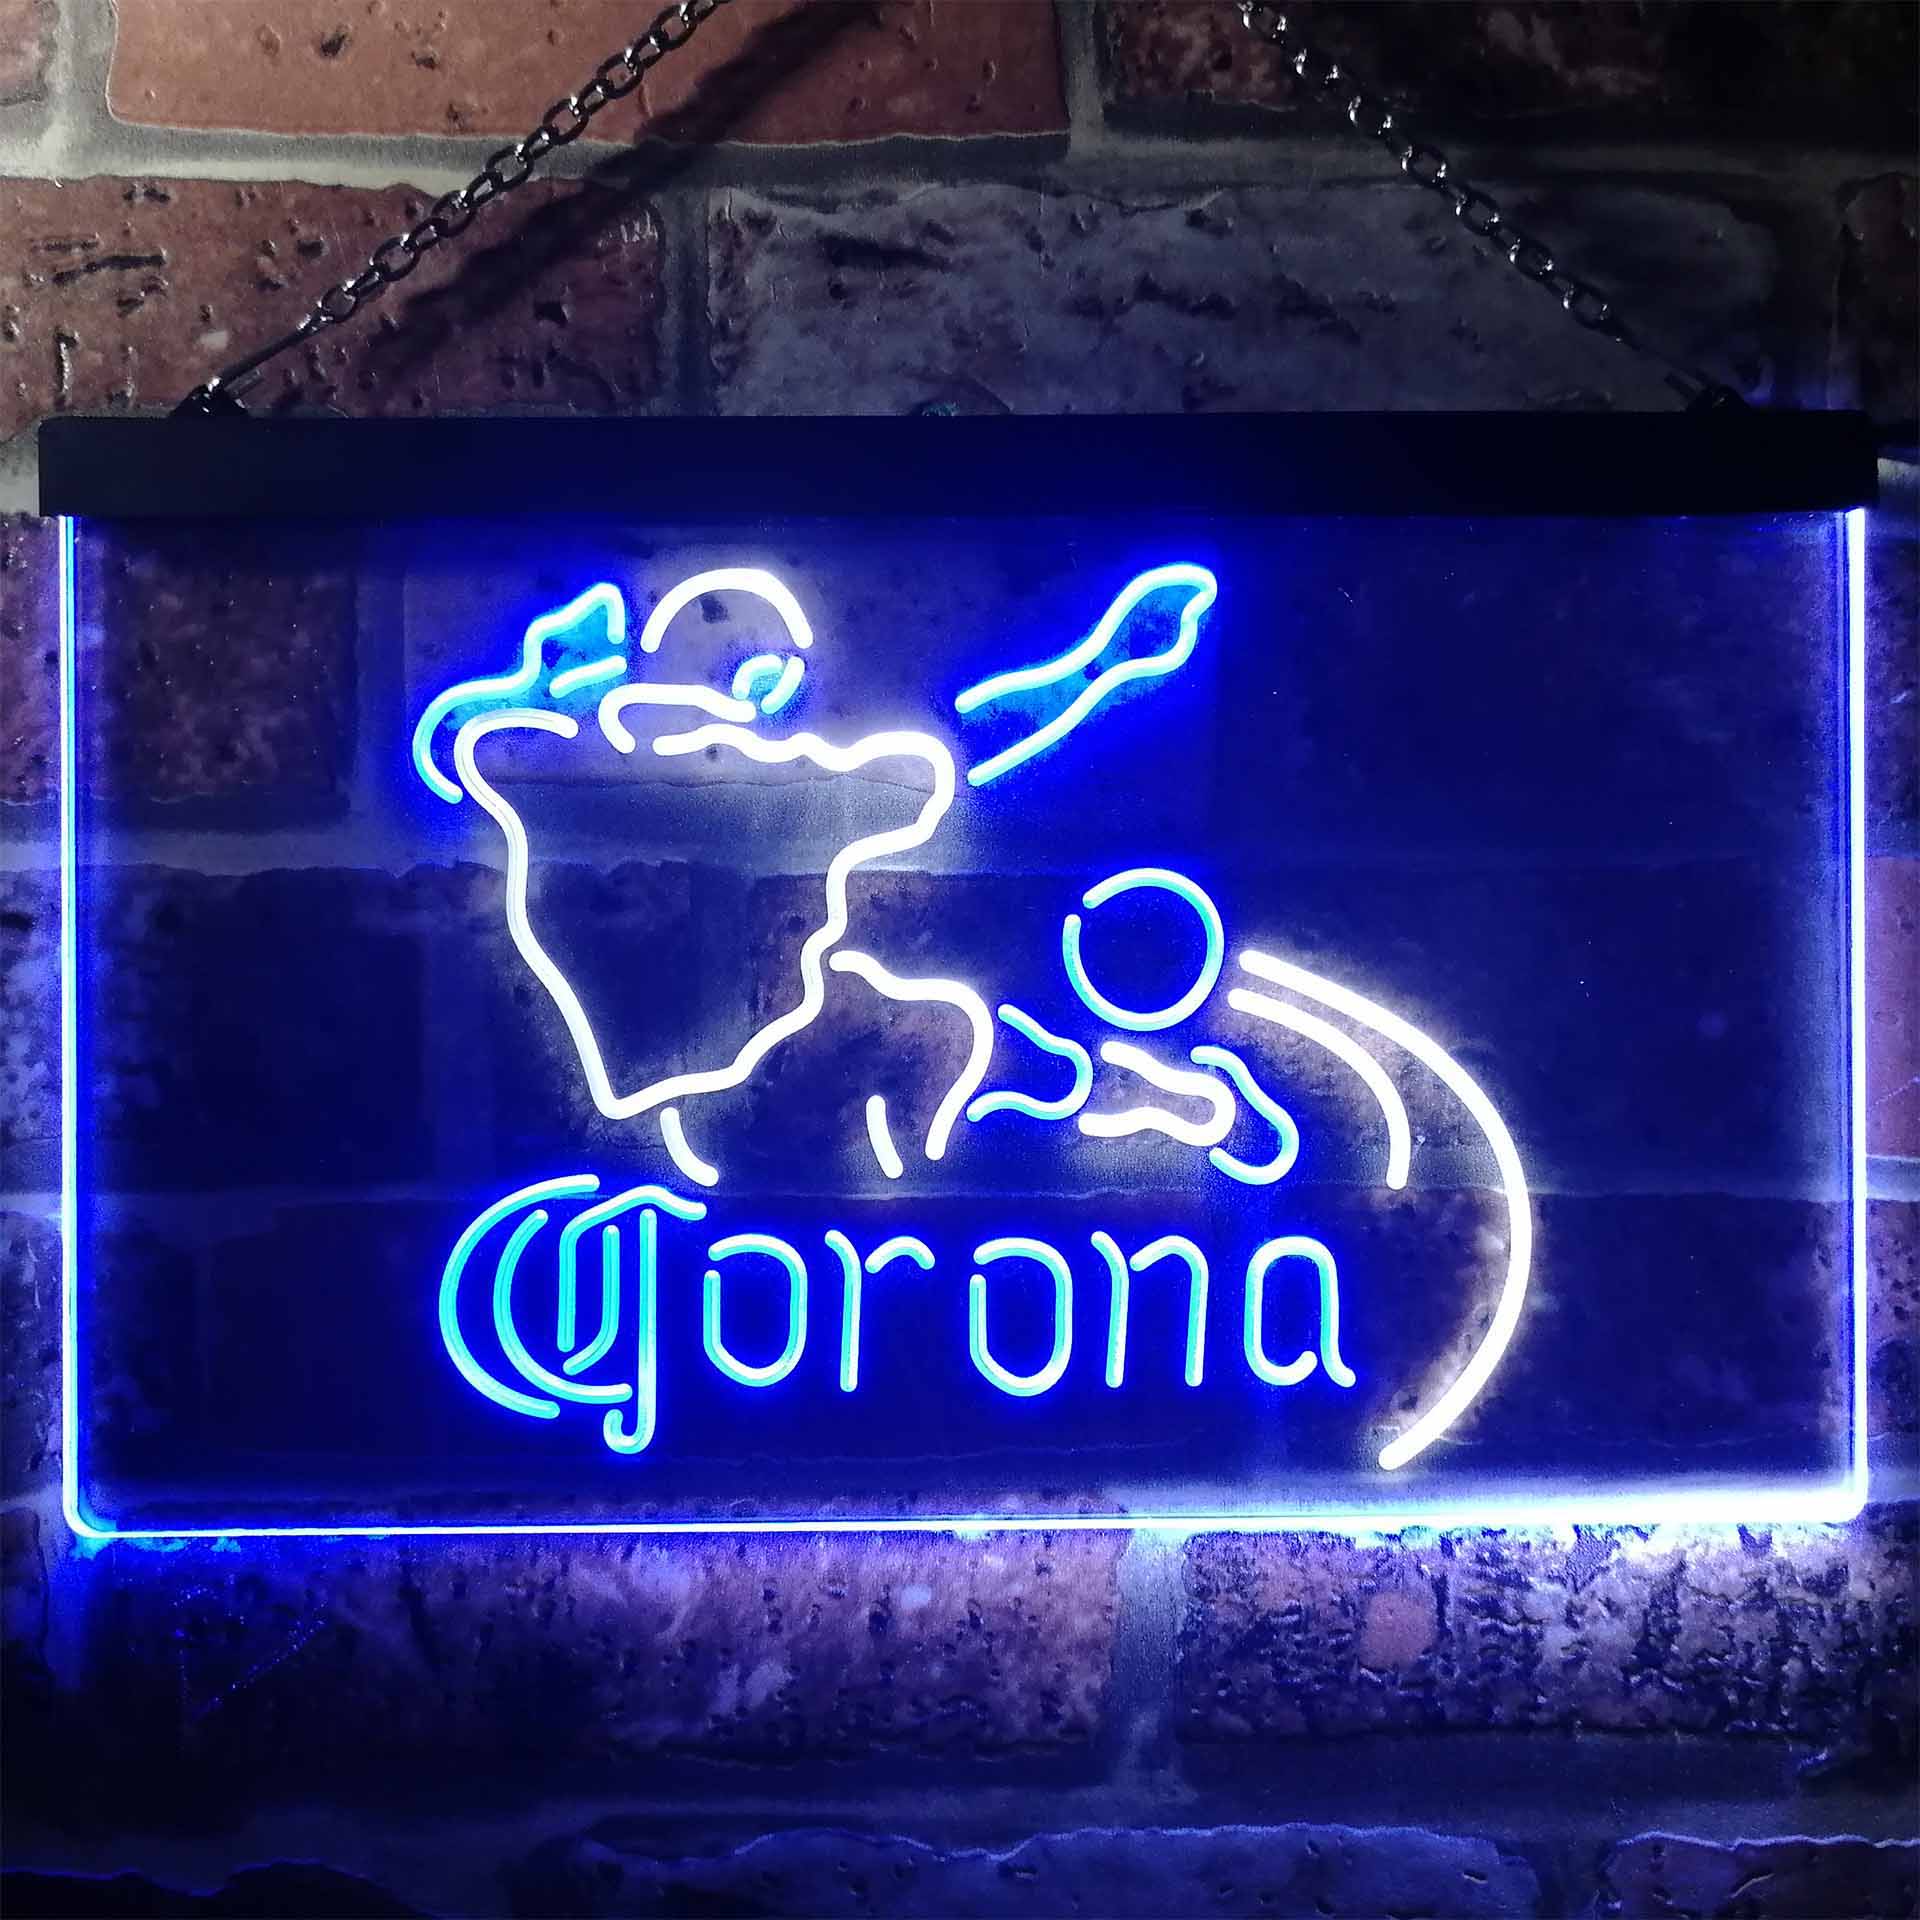 Corona Soccer Game Neon LED Sign